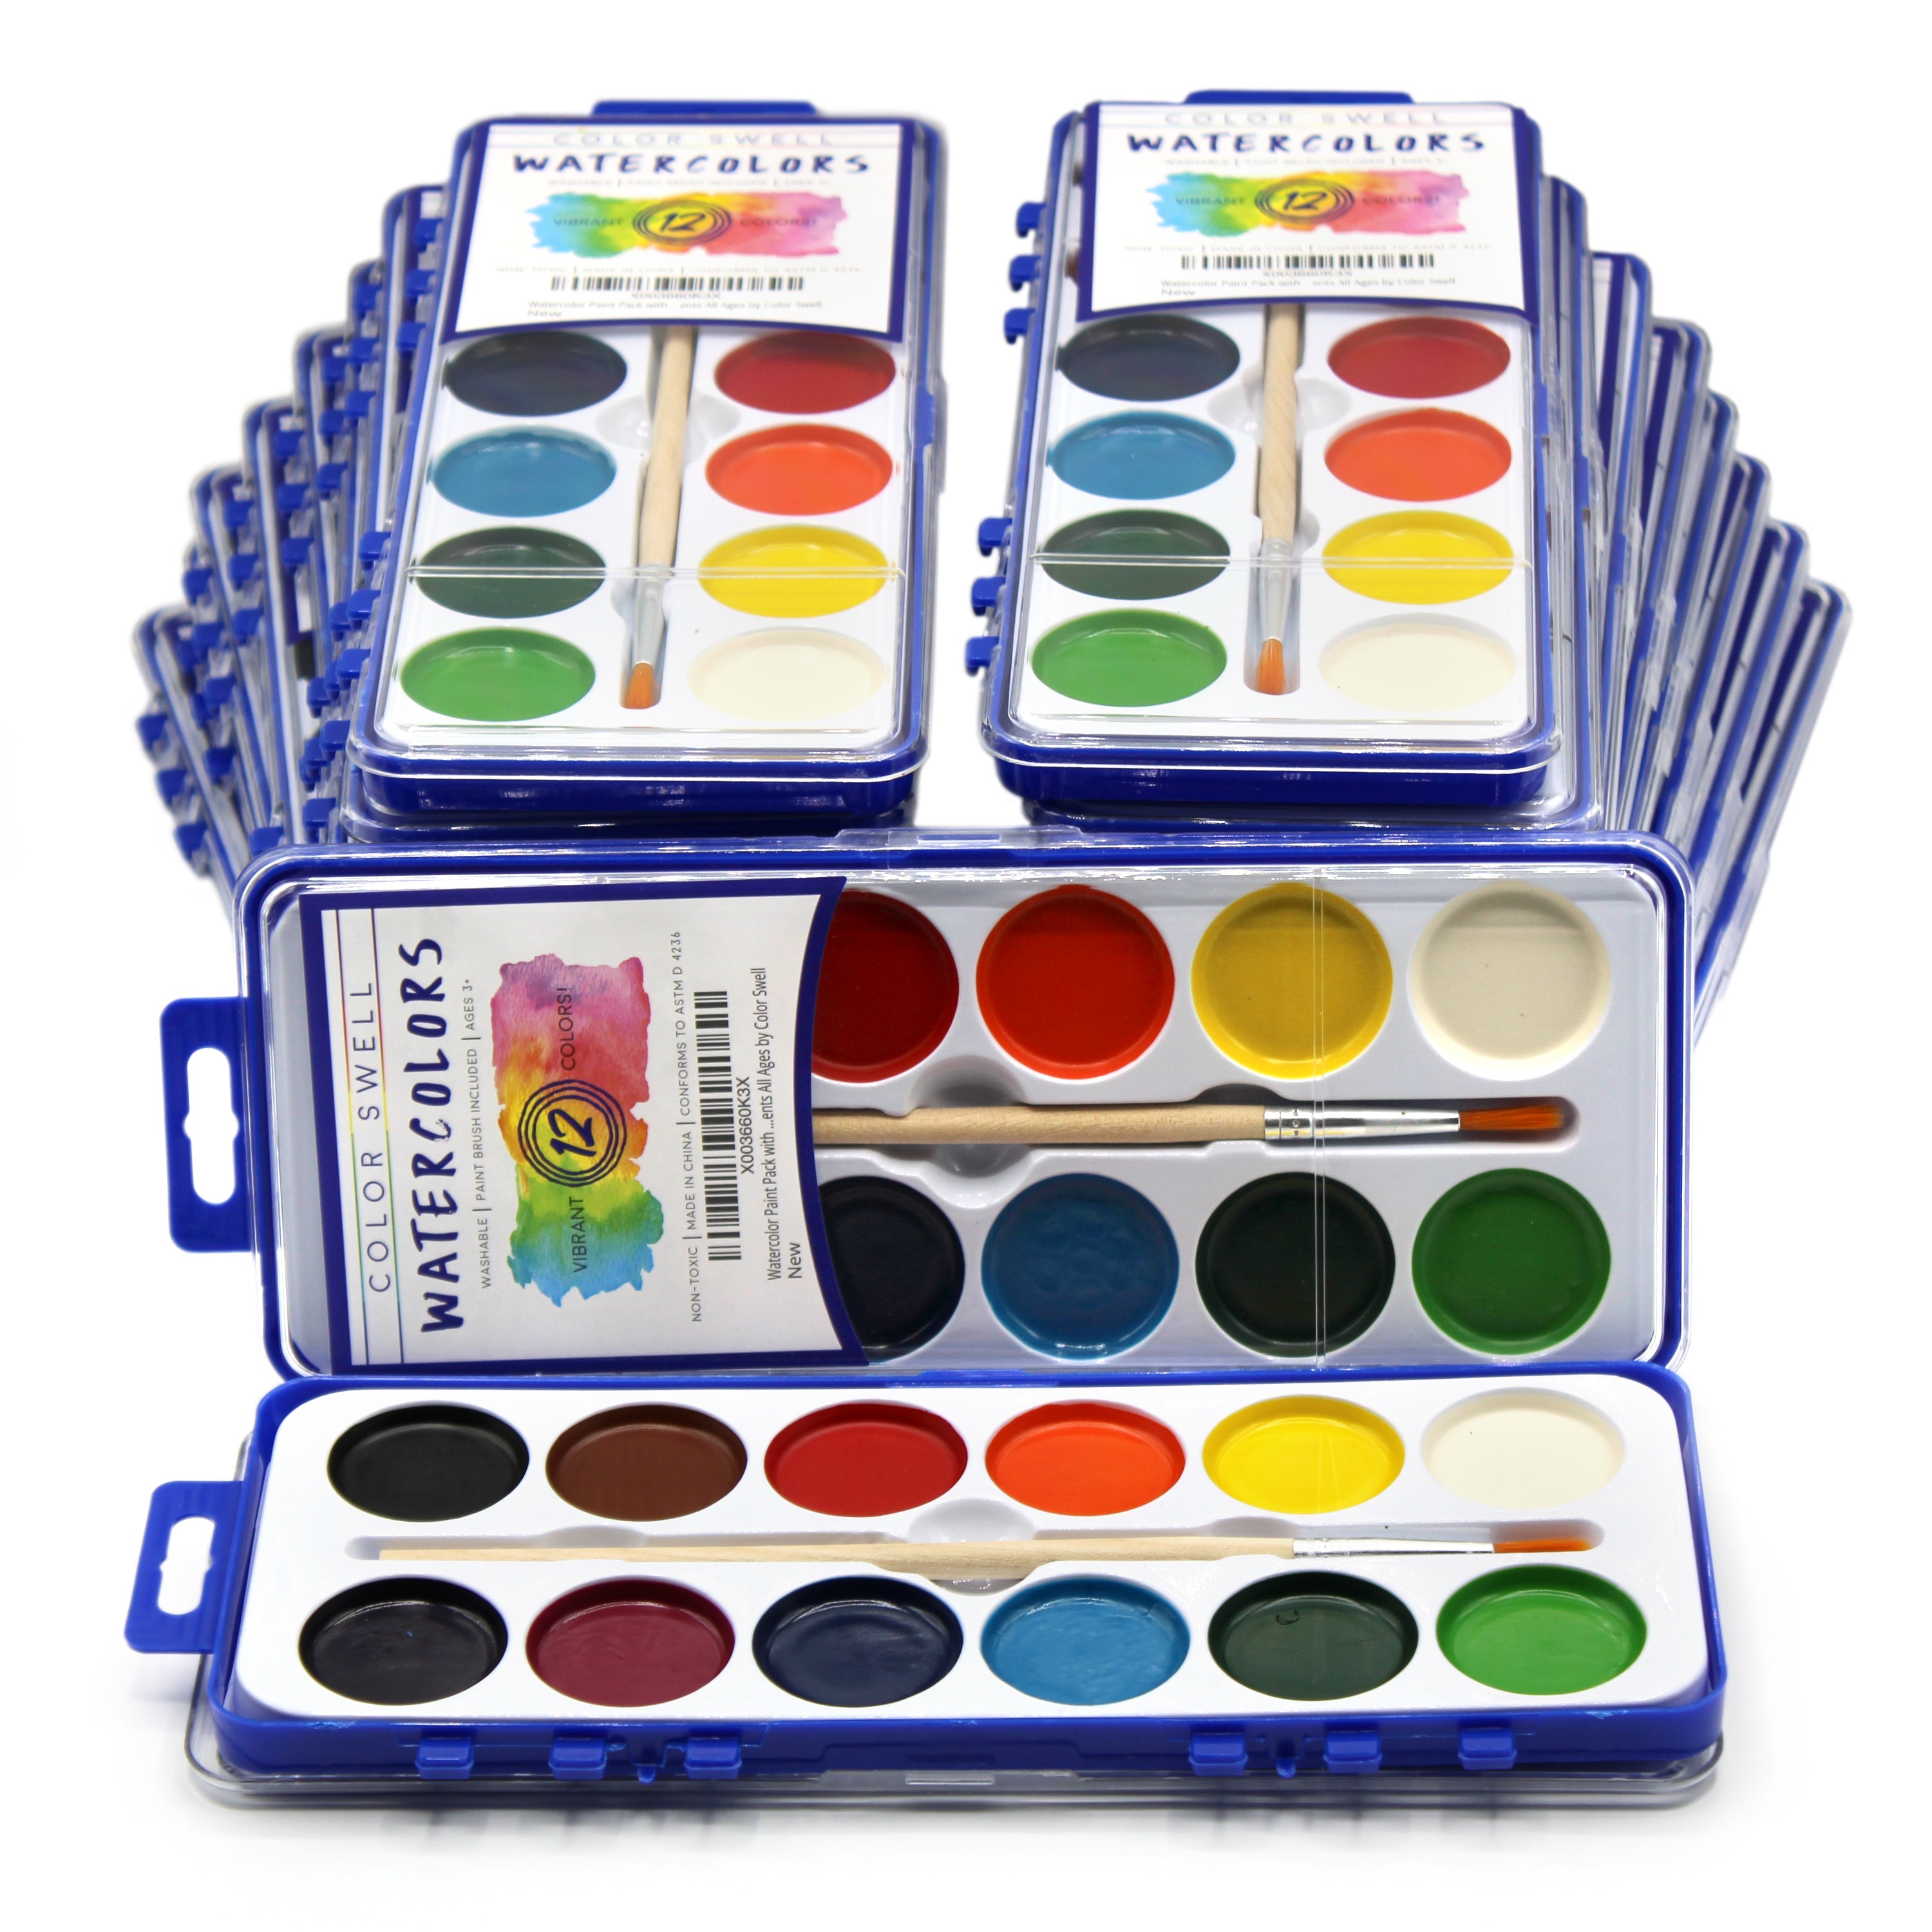 Watercolor Paint Set, 36 Colors of Washable Watercolor Paint Includes Watercolor Palette and 3 Paint Brushes. Great Water Color Kids Paint